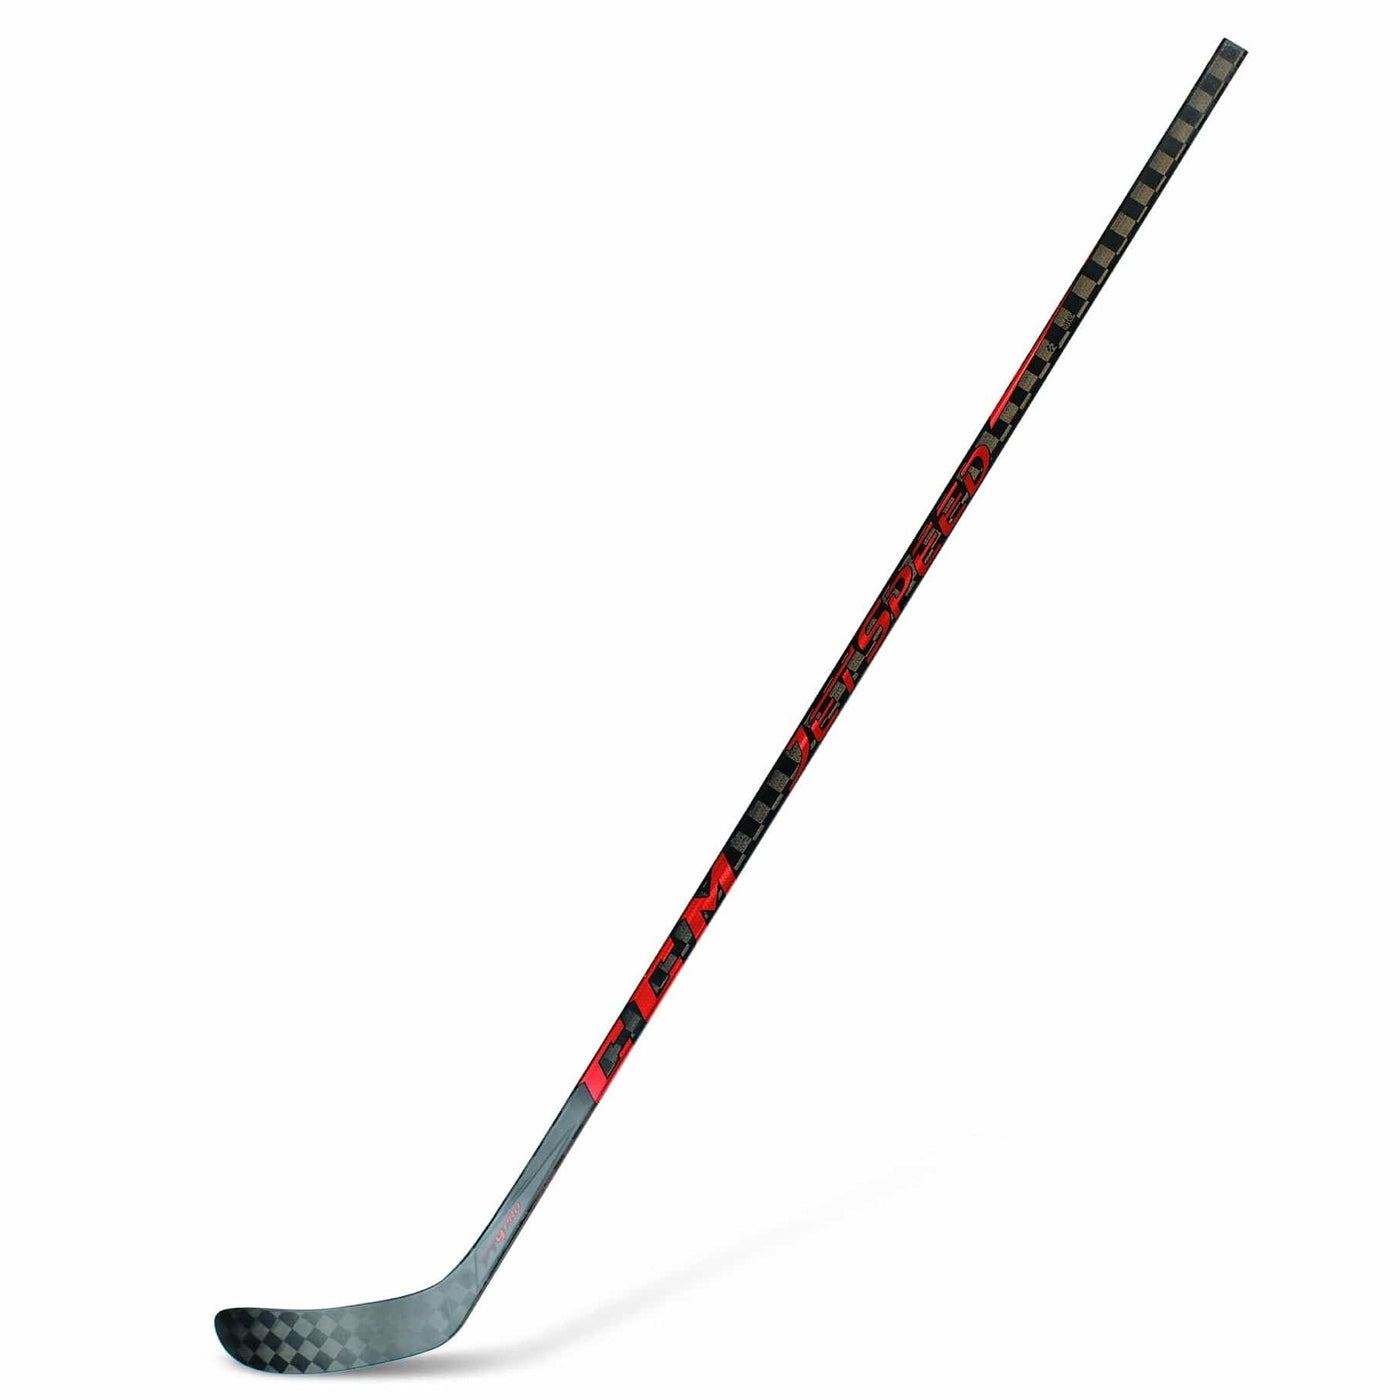 CCM Jetspeed FT4 Pro Stock Senior Hockey Stick - Morgan Rielly - The Hockey Shop Source For Sports